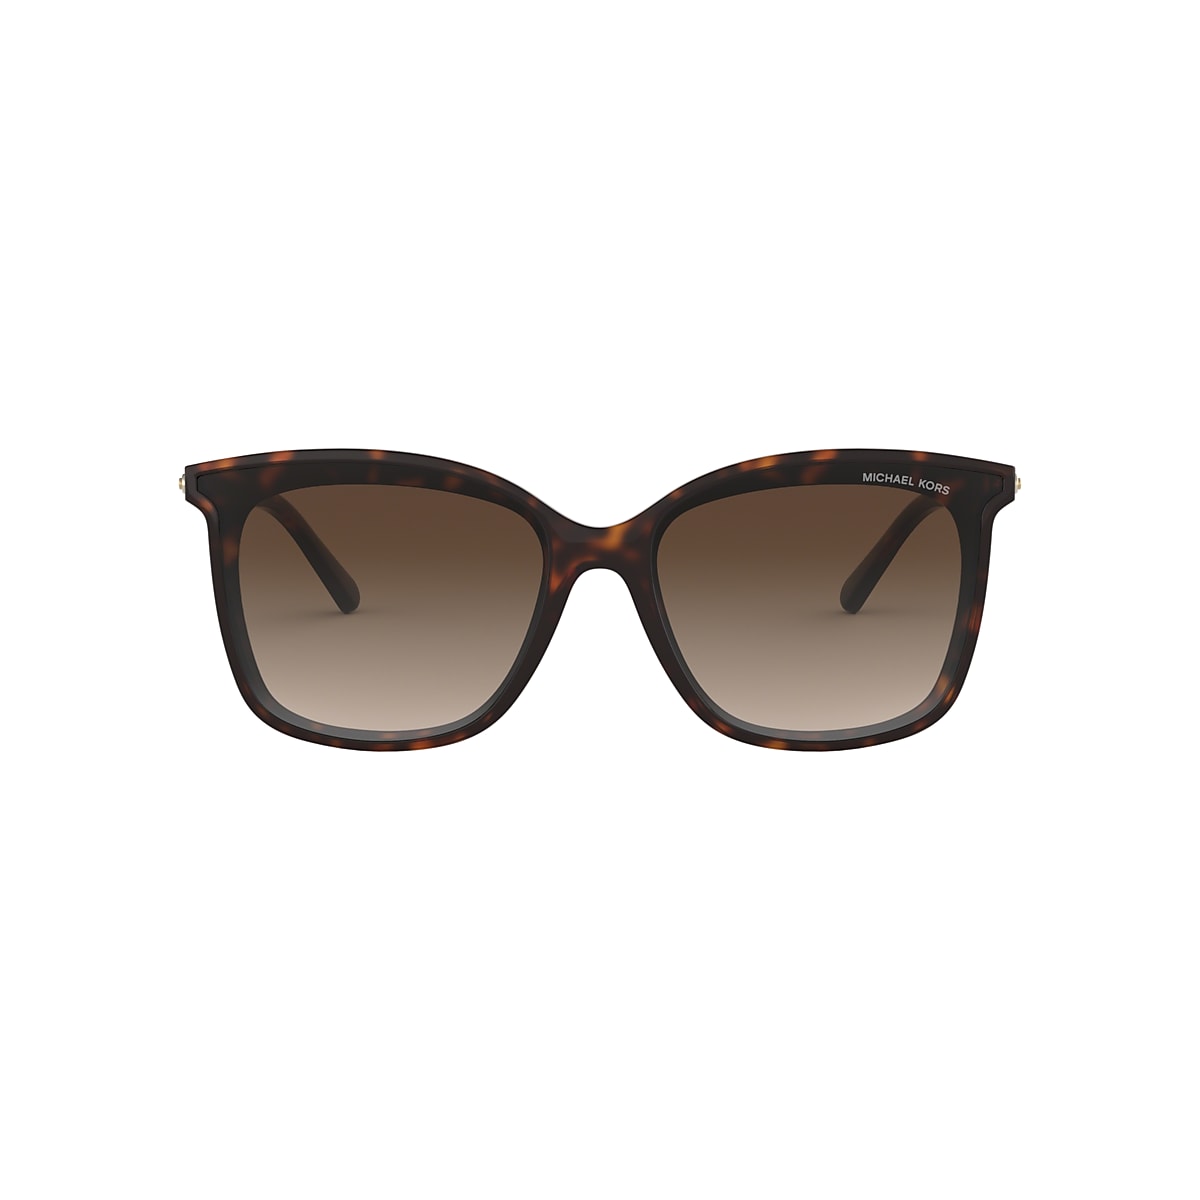 MICHAEL KORS MK2079U Zermatt Dark Tortoise - Woman Sunglasses, Smoke  Gradient Lens